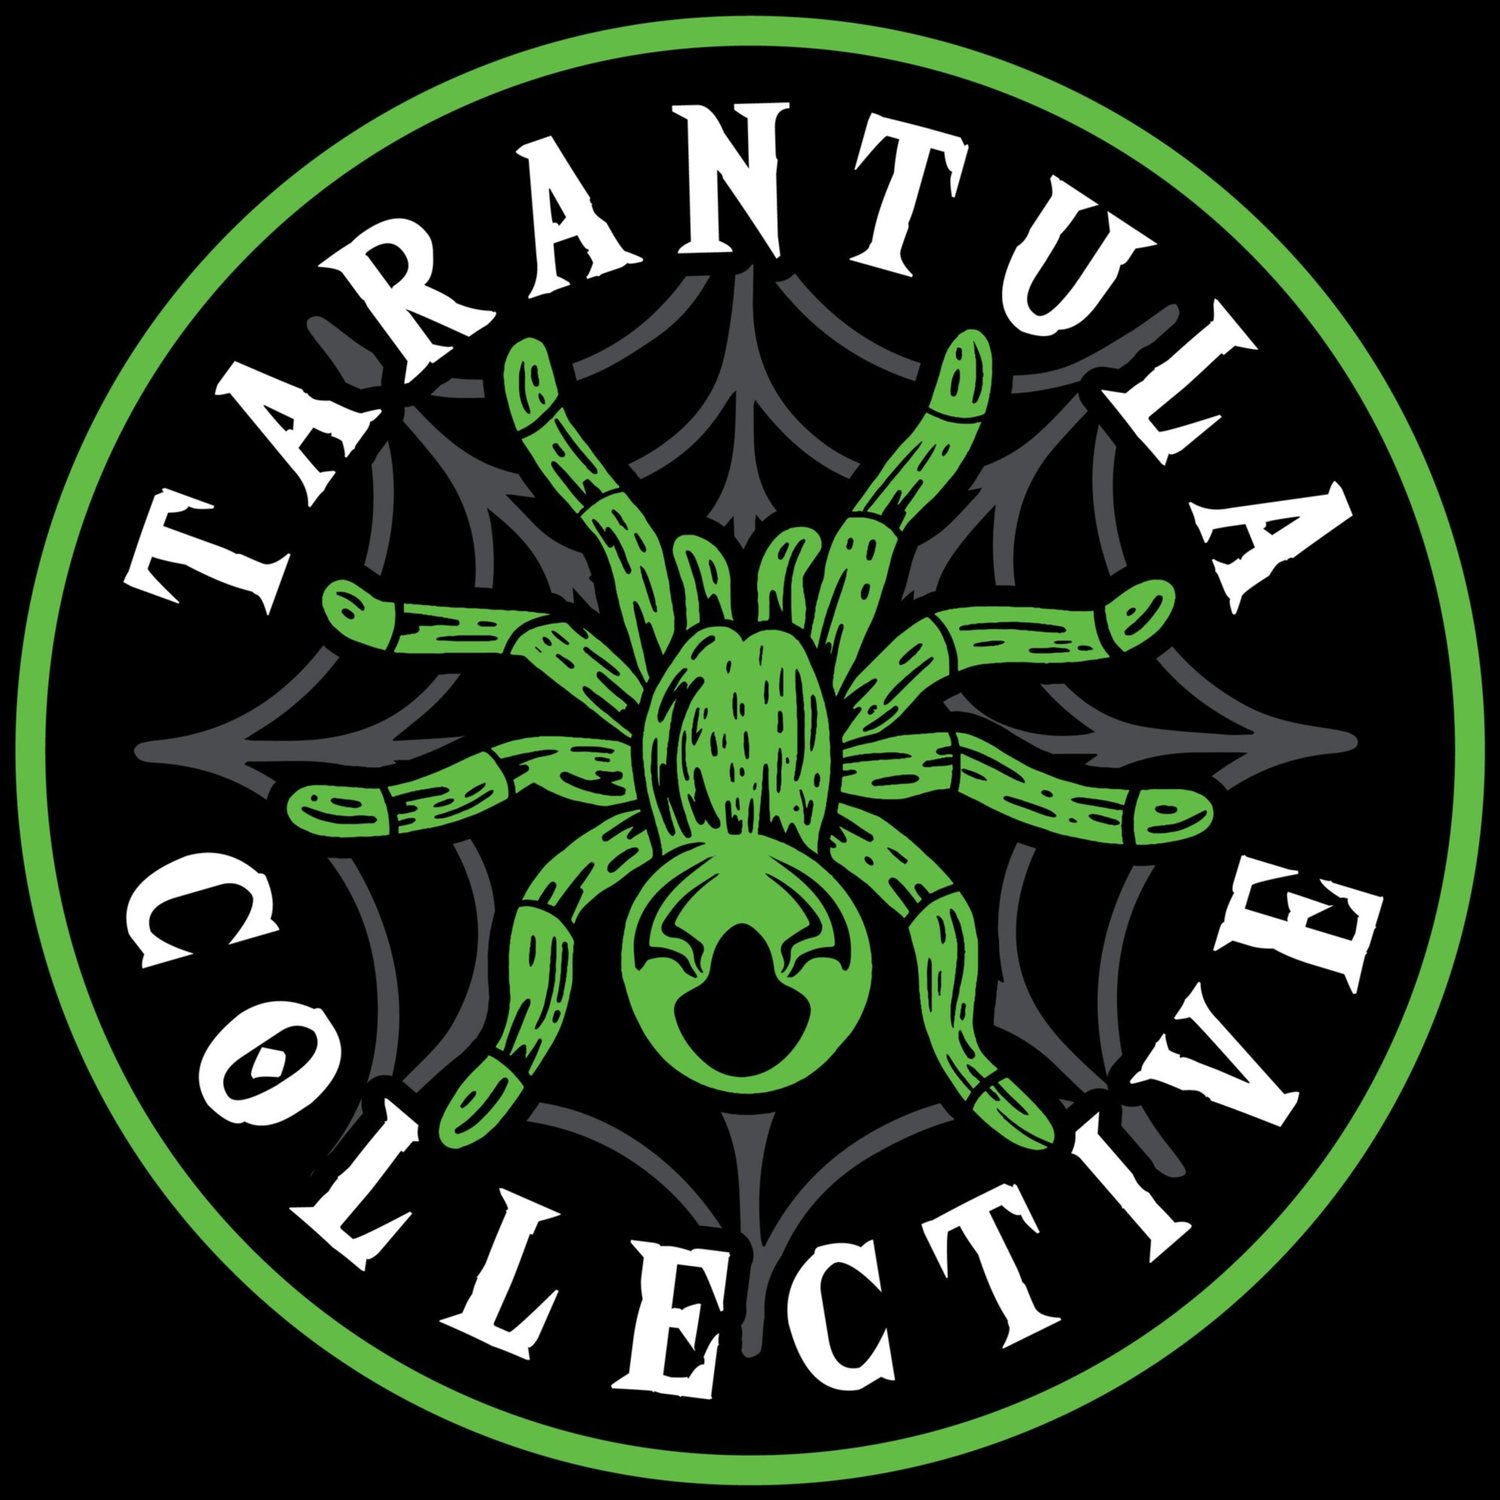 The Tarantula Collective